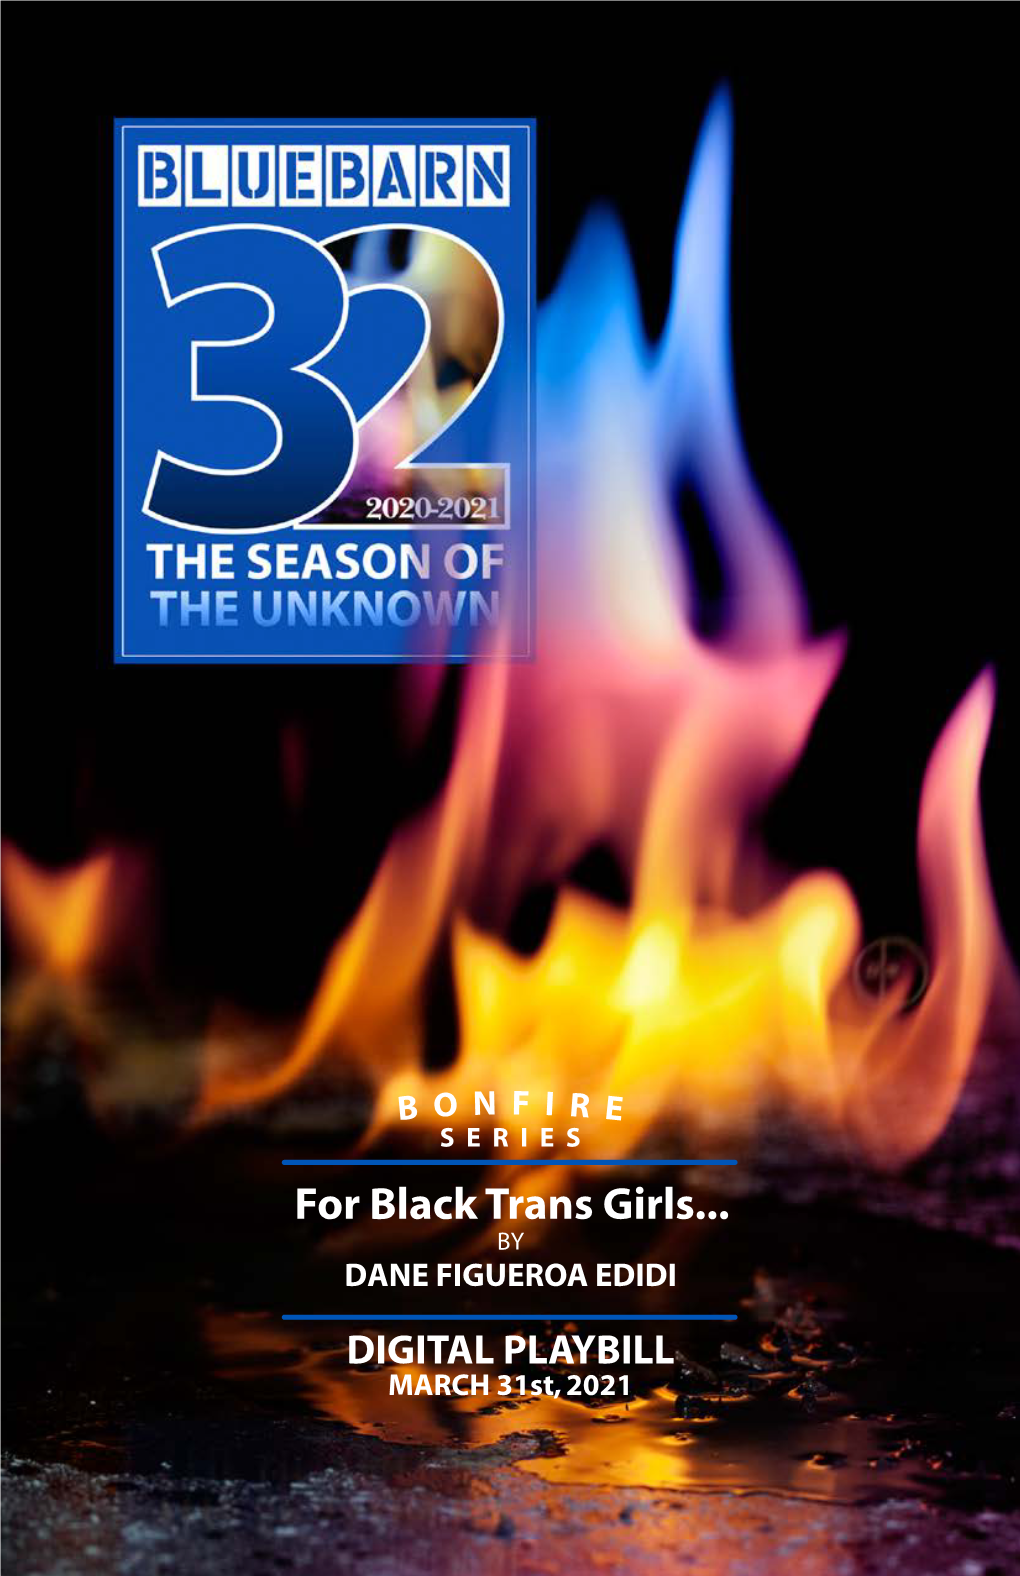 For Black Trans Girls... by DANE FIGUEROA EDIDI DIGITAL PLAYBILL MARCH 31St, 2021 BLUEBARN | 32 | Season of the Unknown